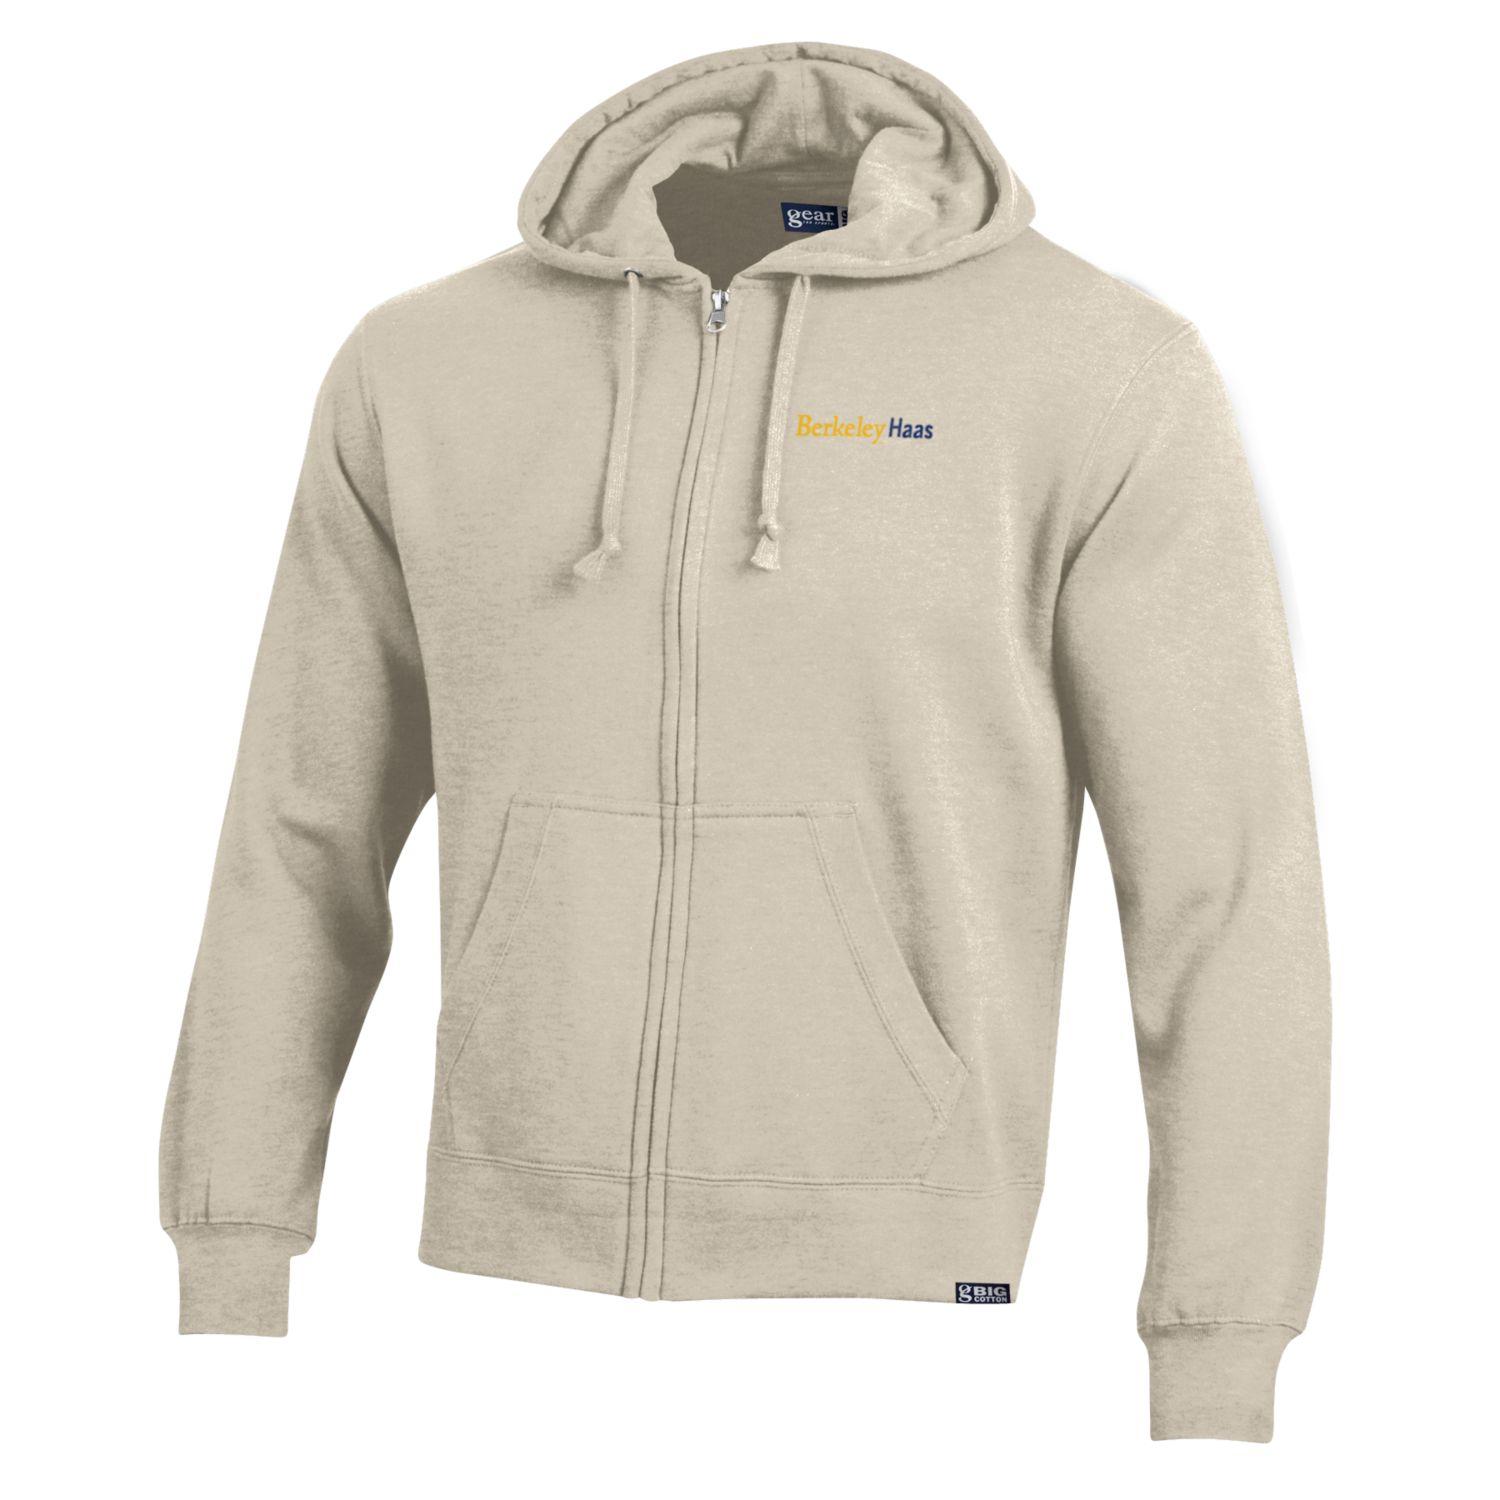 U.C. Berkeley Haas Business School embroidered left chest cotton rich zip-up hoodie sweatshirt- Oatmeal-Shop College Wear